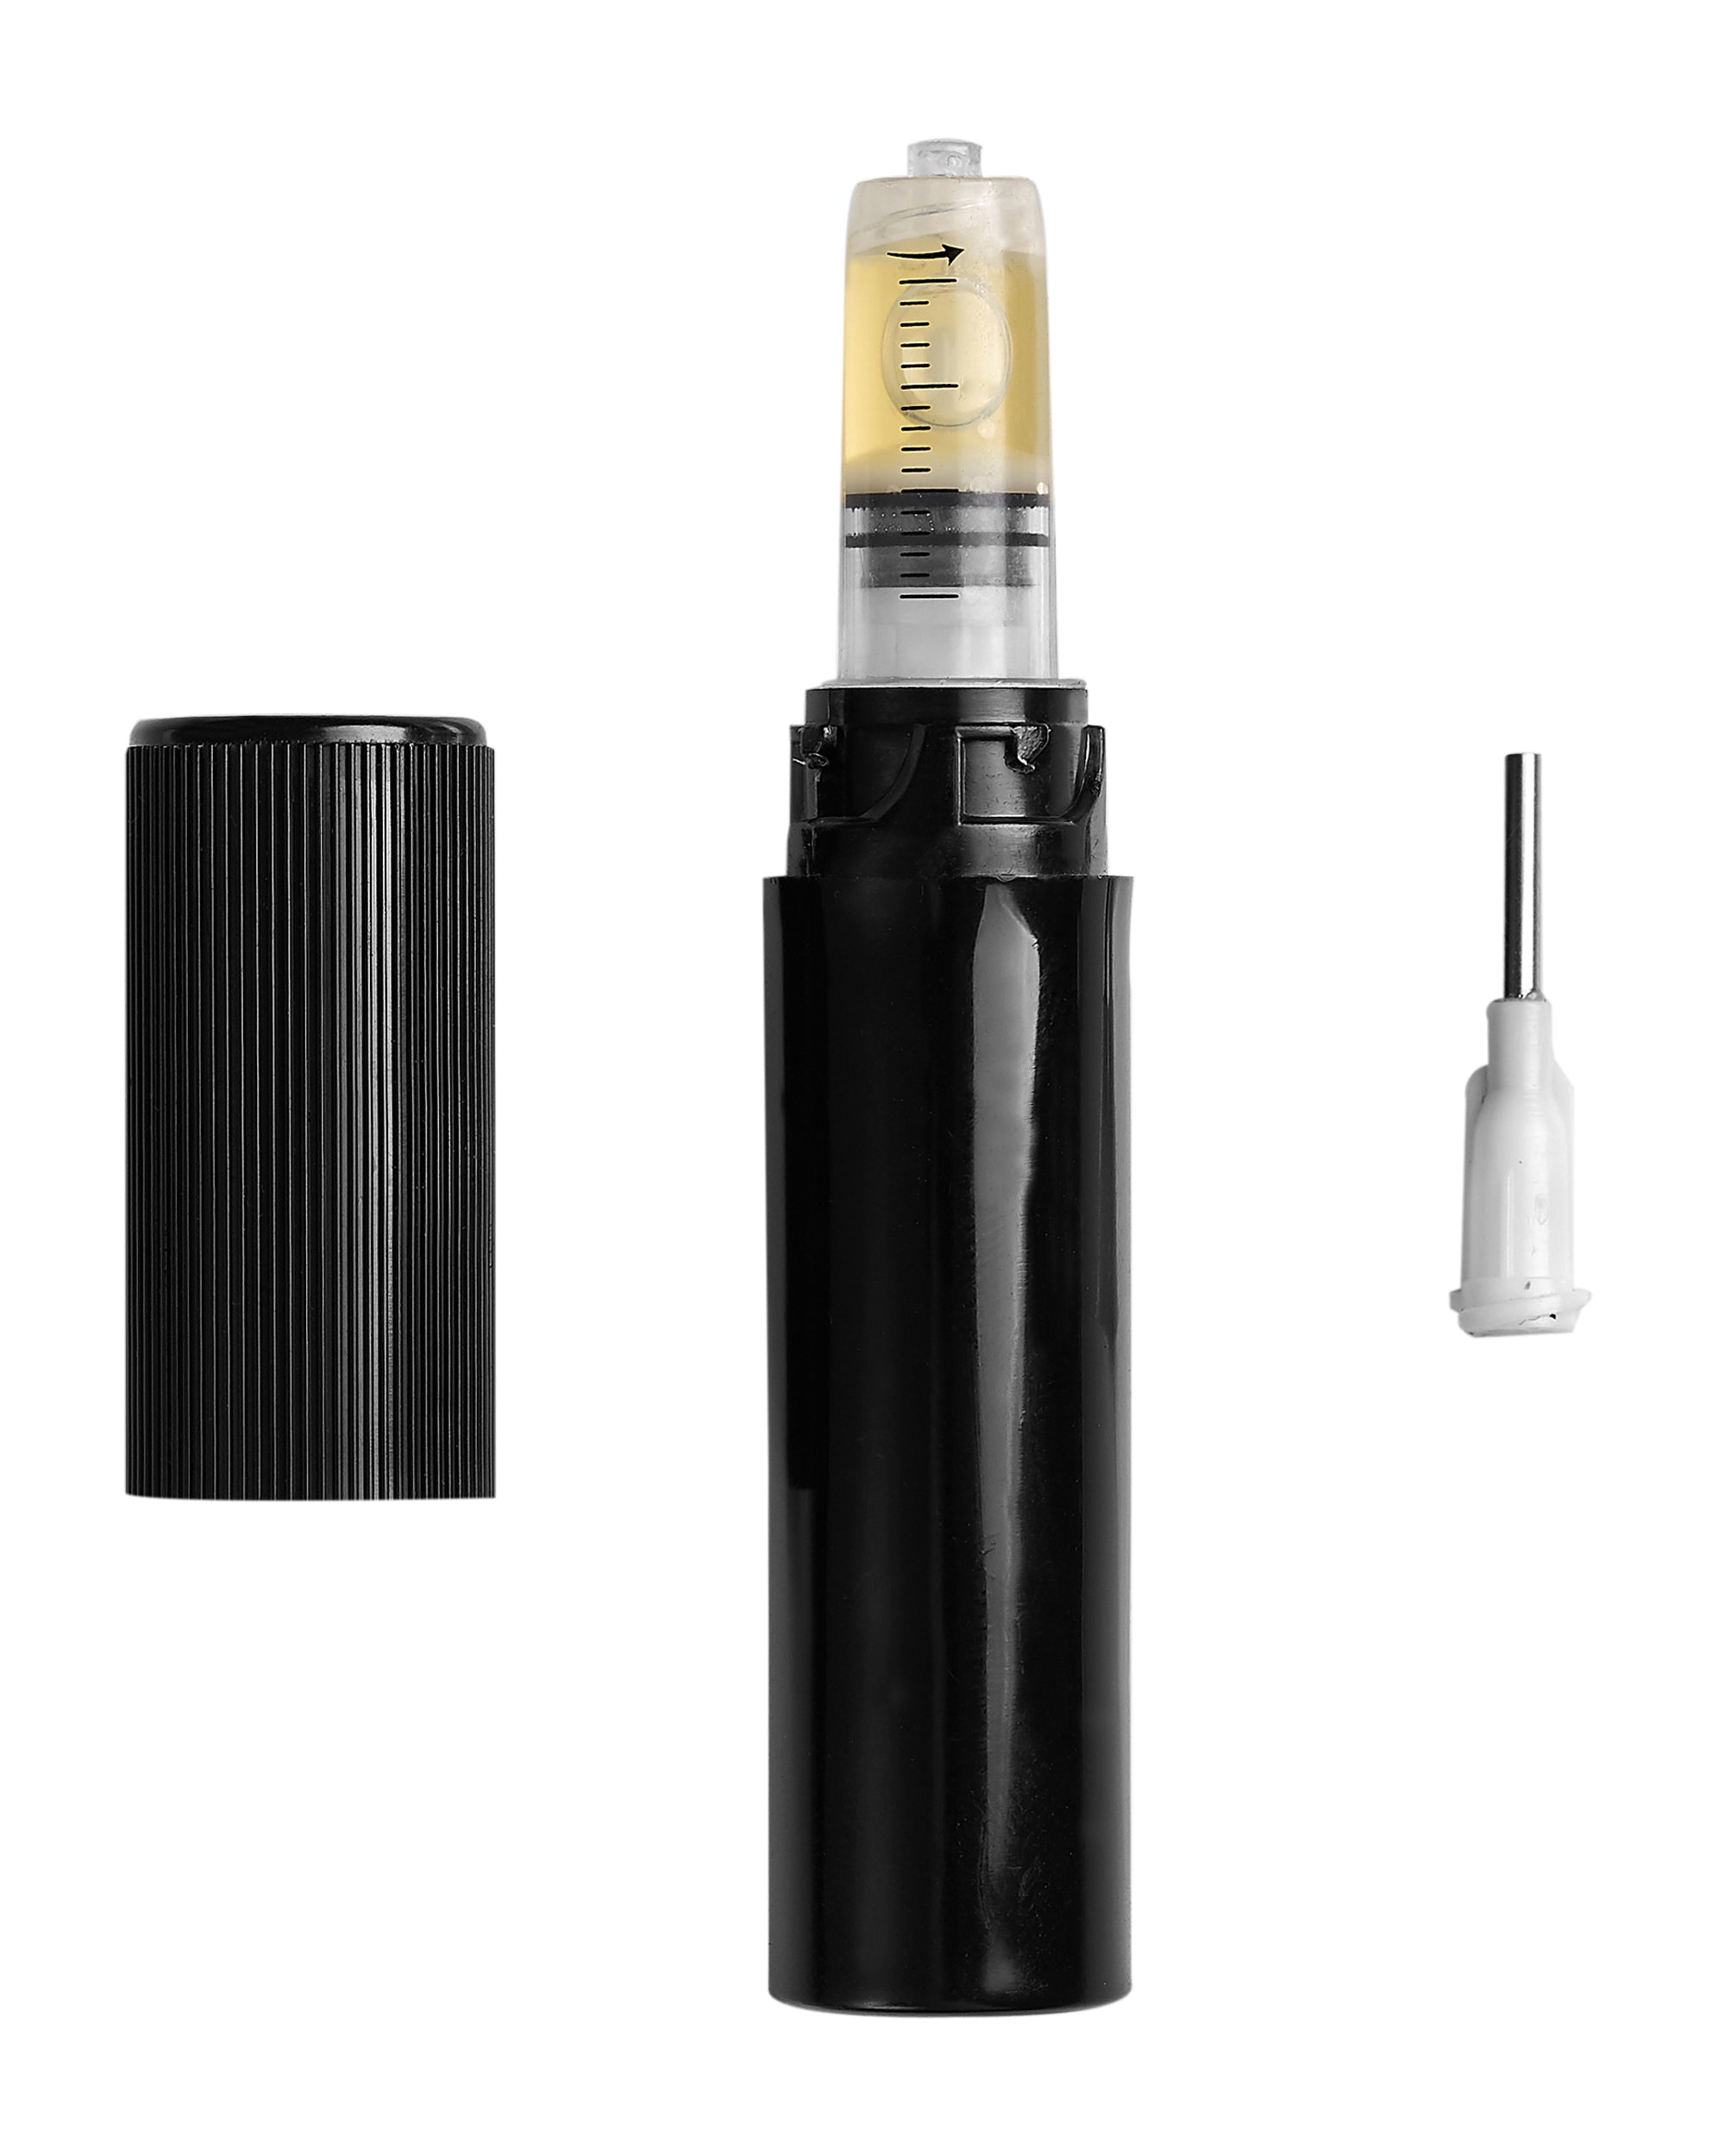 Child Resistant & Luer Lock | DymaPak Twistspenser Black Plastic Dab Applicator Syringes | 1mL - 0.33mL Increments - 5